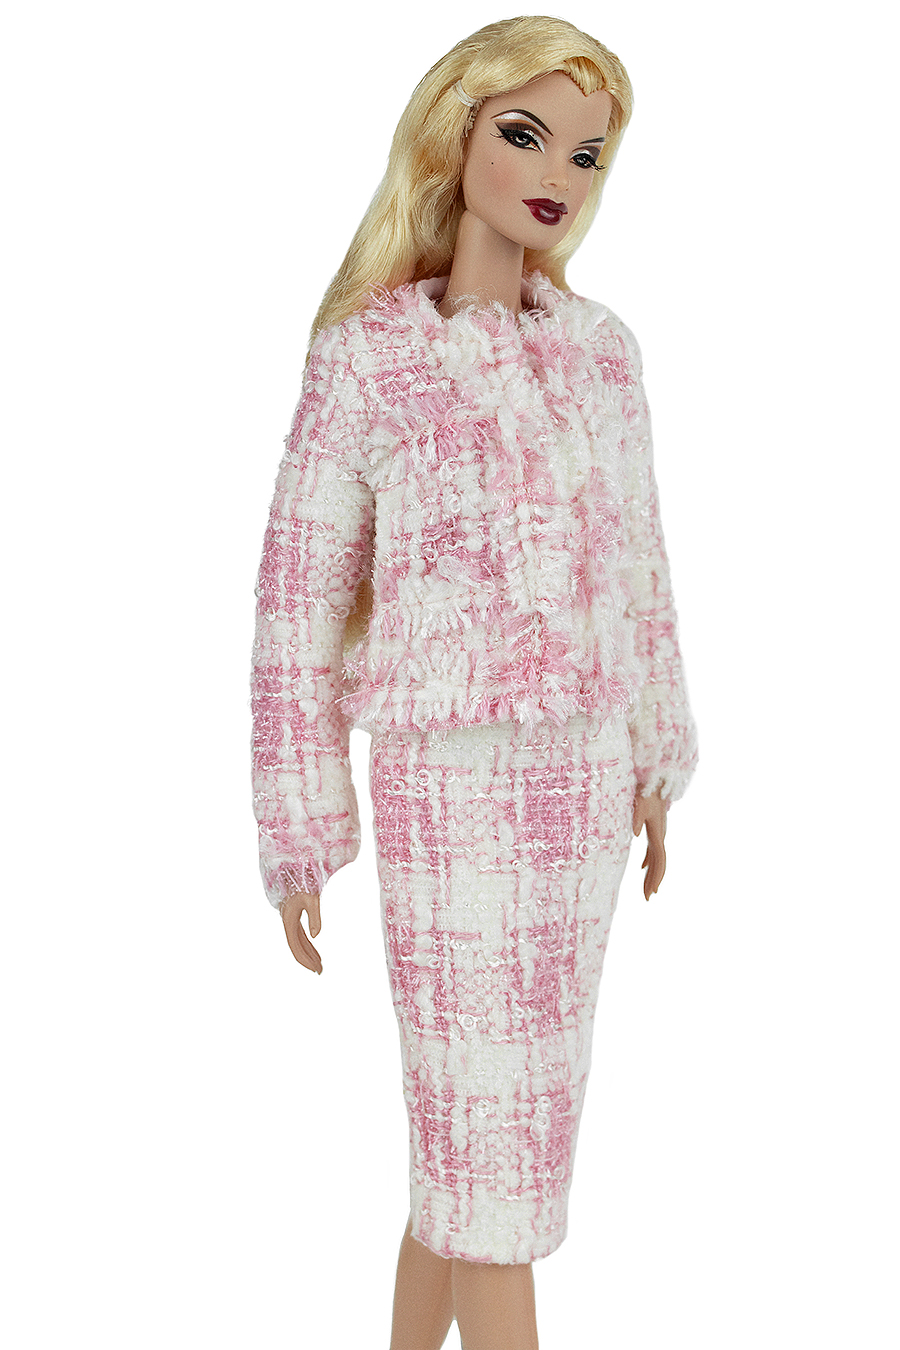 ELENPRIV Checkered tweed jacket with lining for Fashion Royalty FR2 dolls 